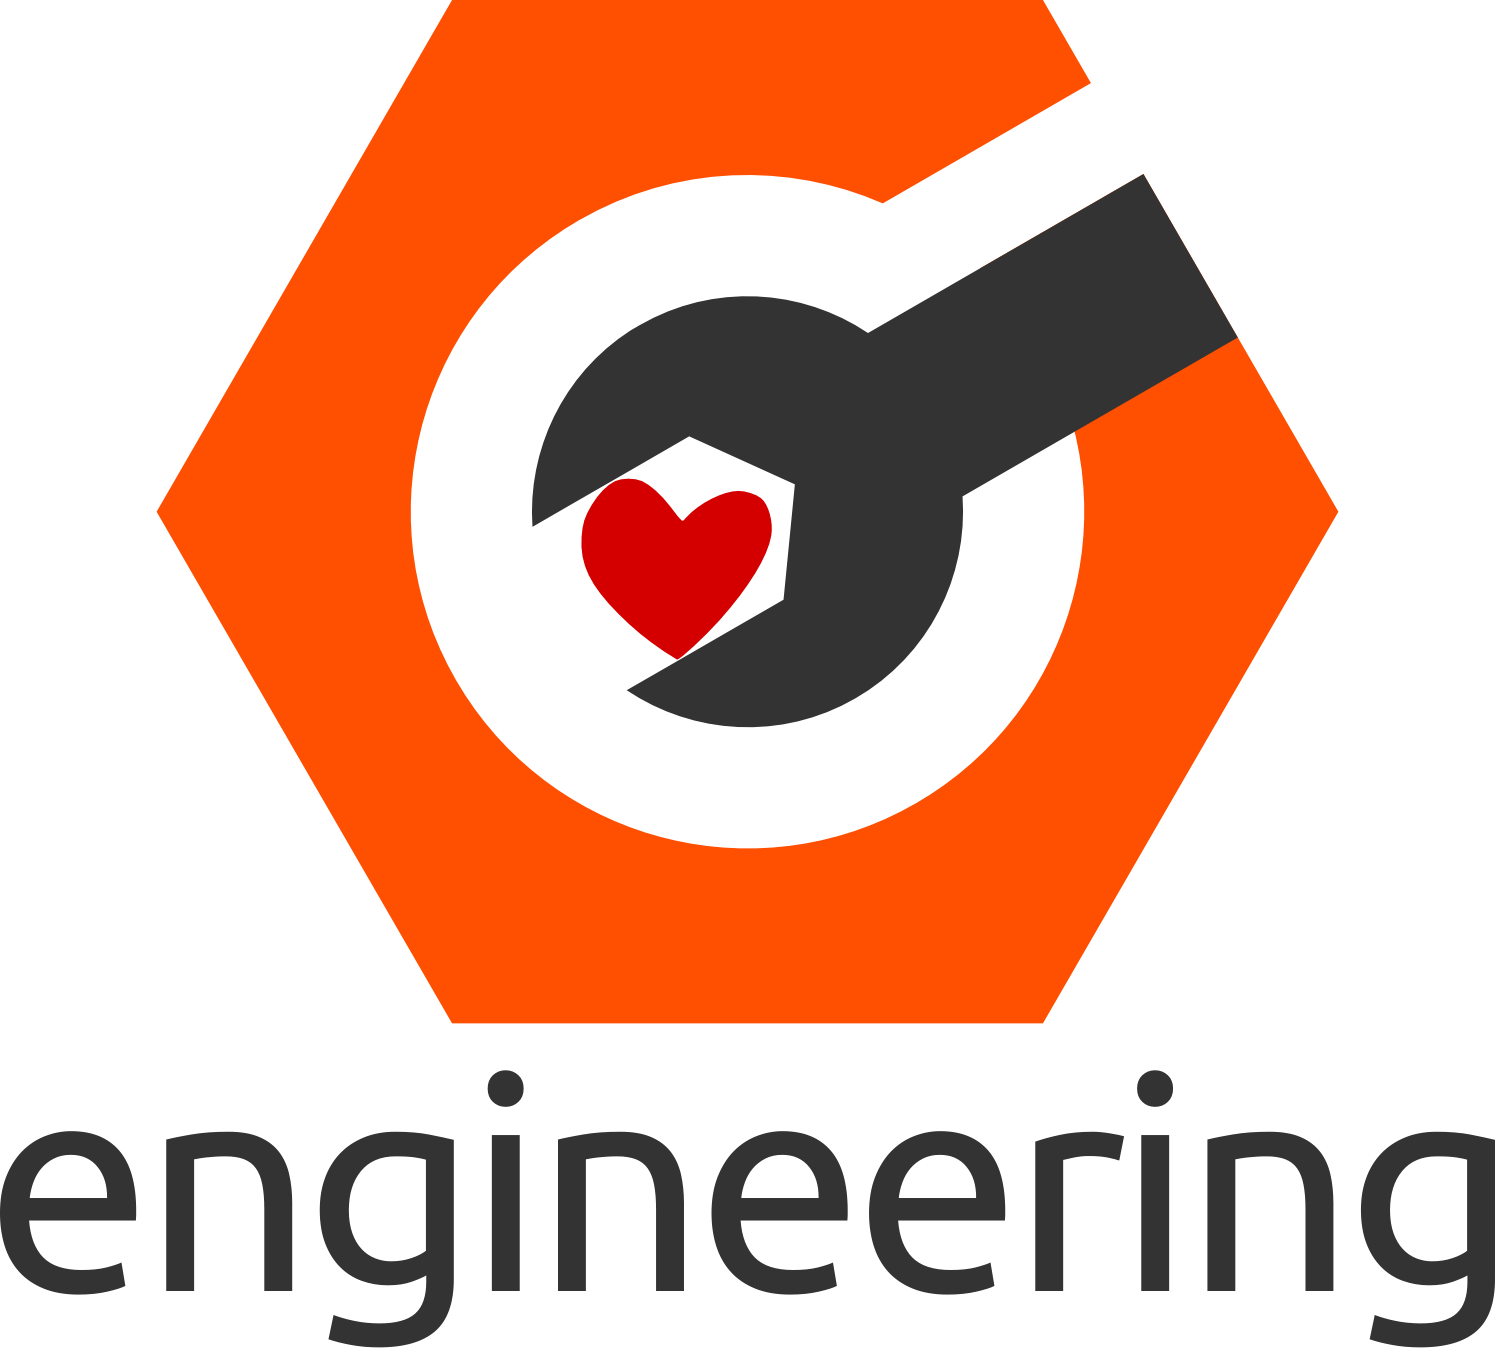 Engineering Gear Logo Design Symbol Stock Vector (Royalty Free) 641069857 |  Shutterstock